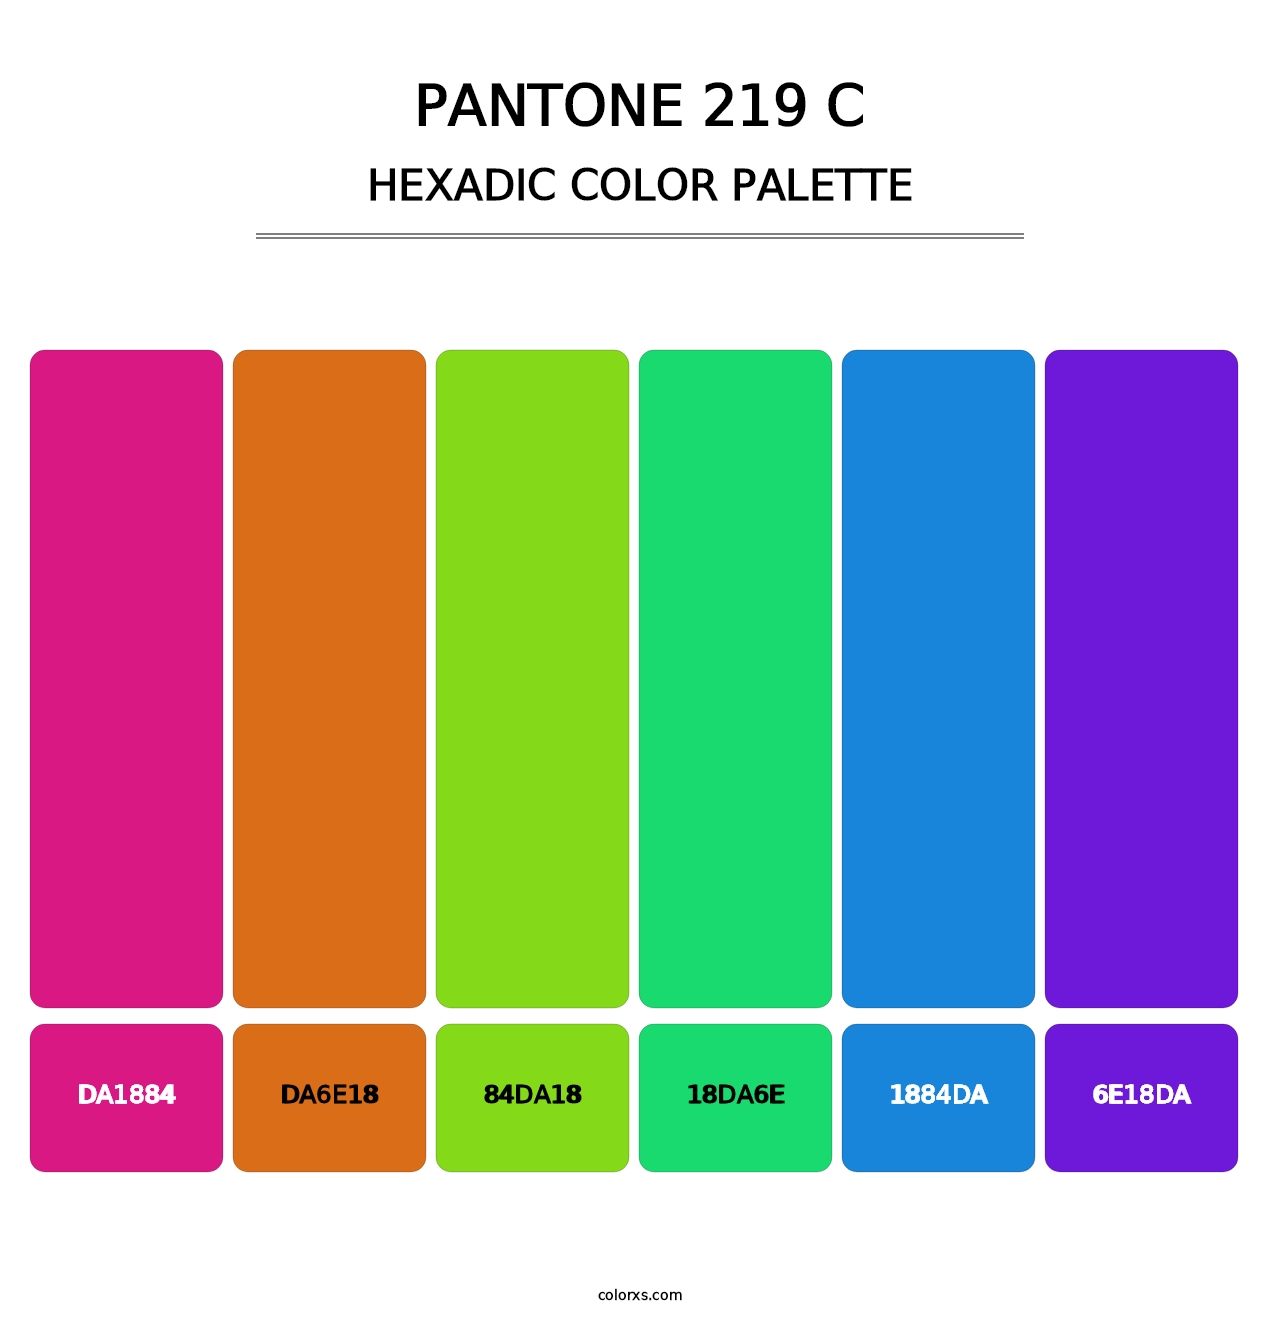 PANTONE 219 C - Hexadic Color Palette